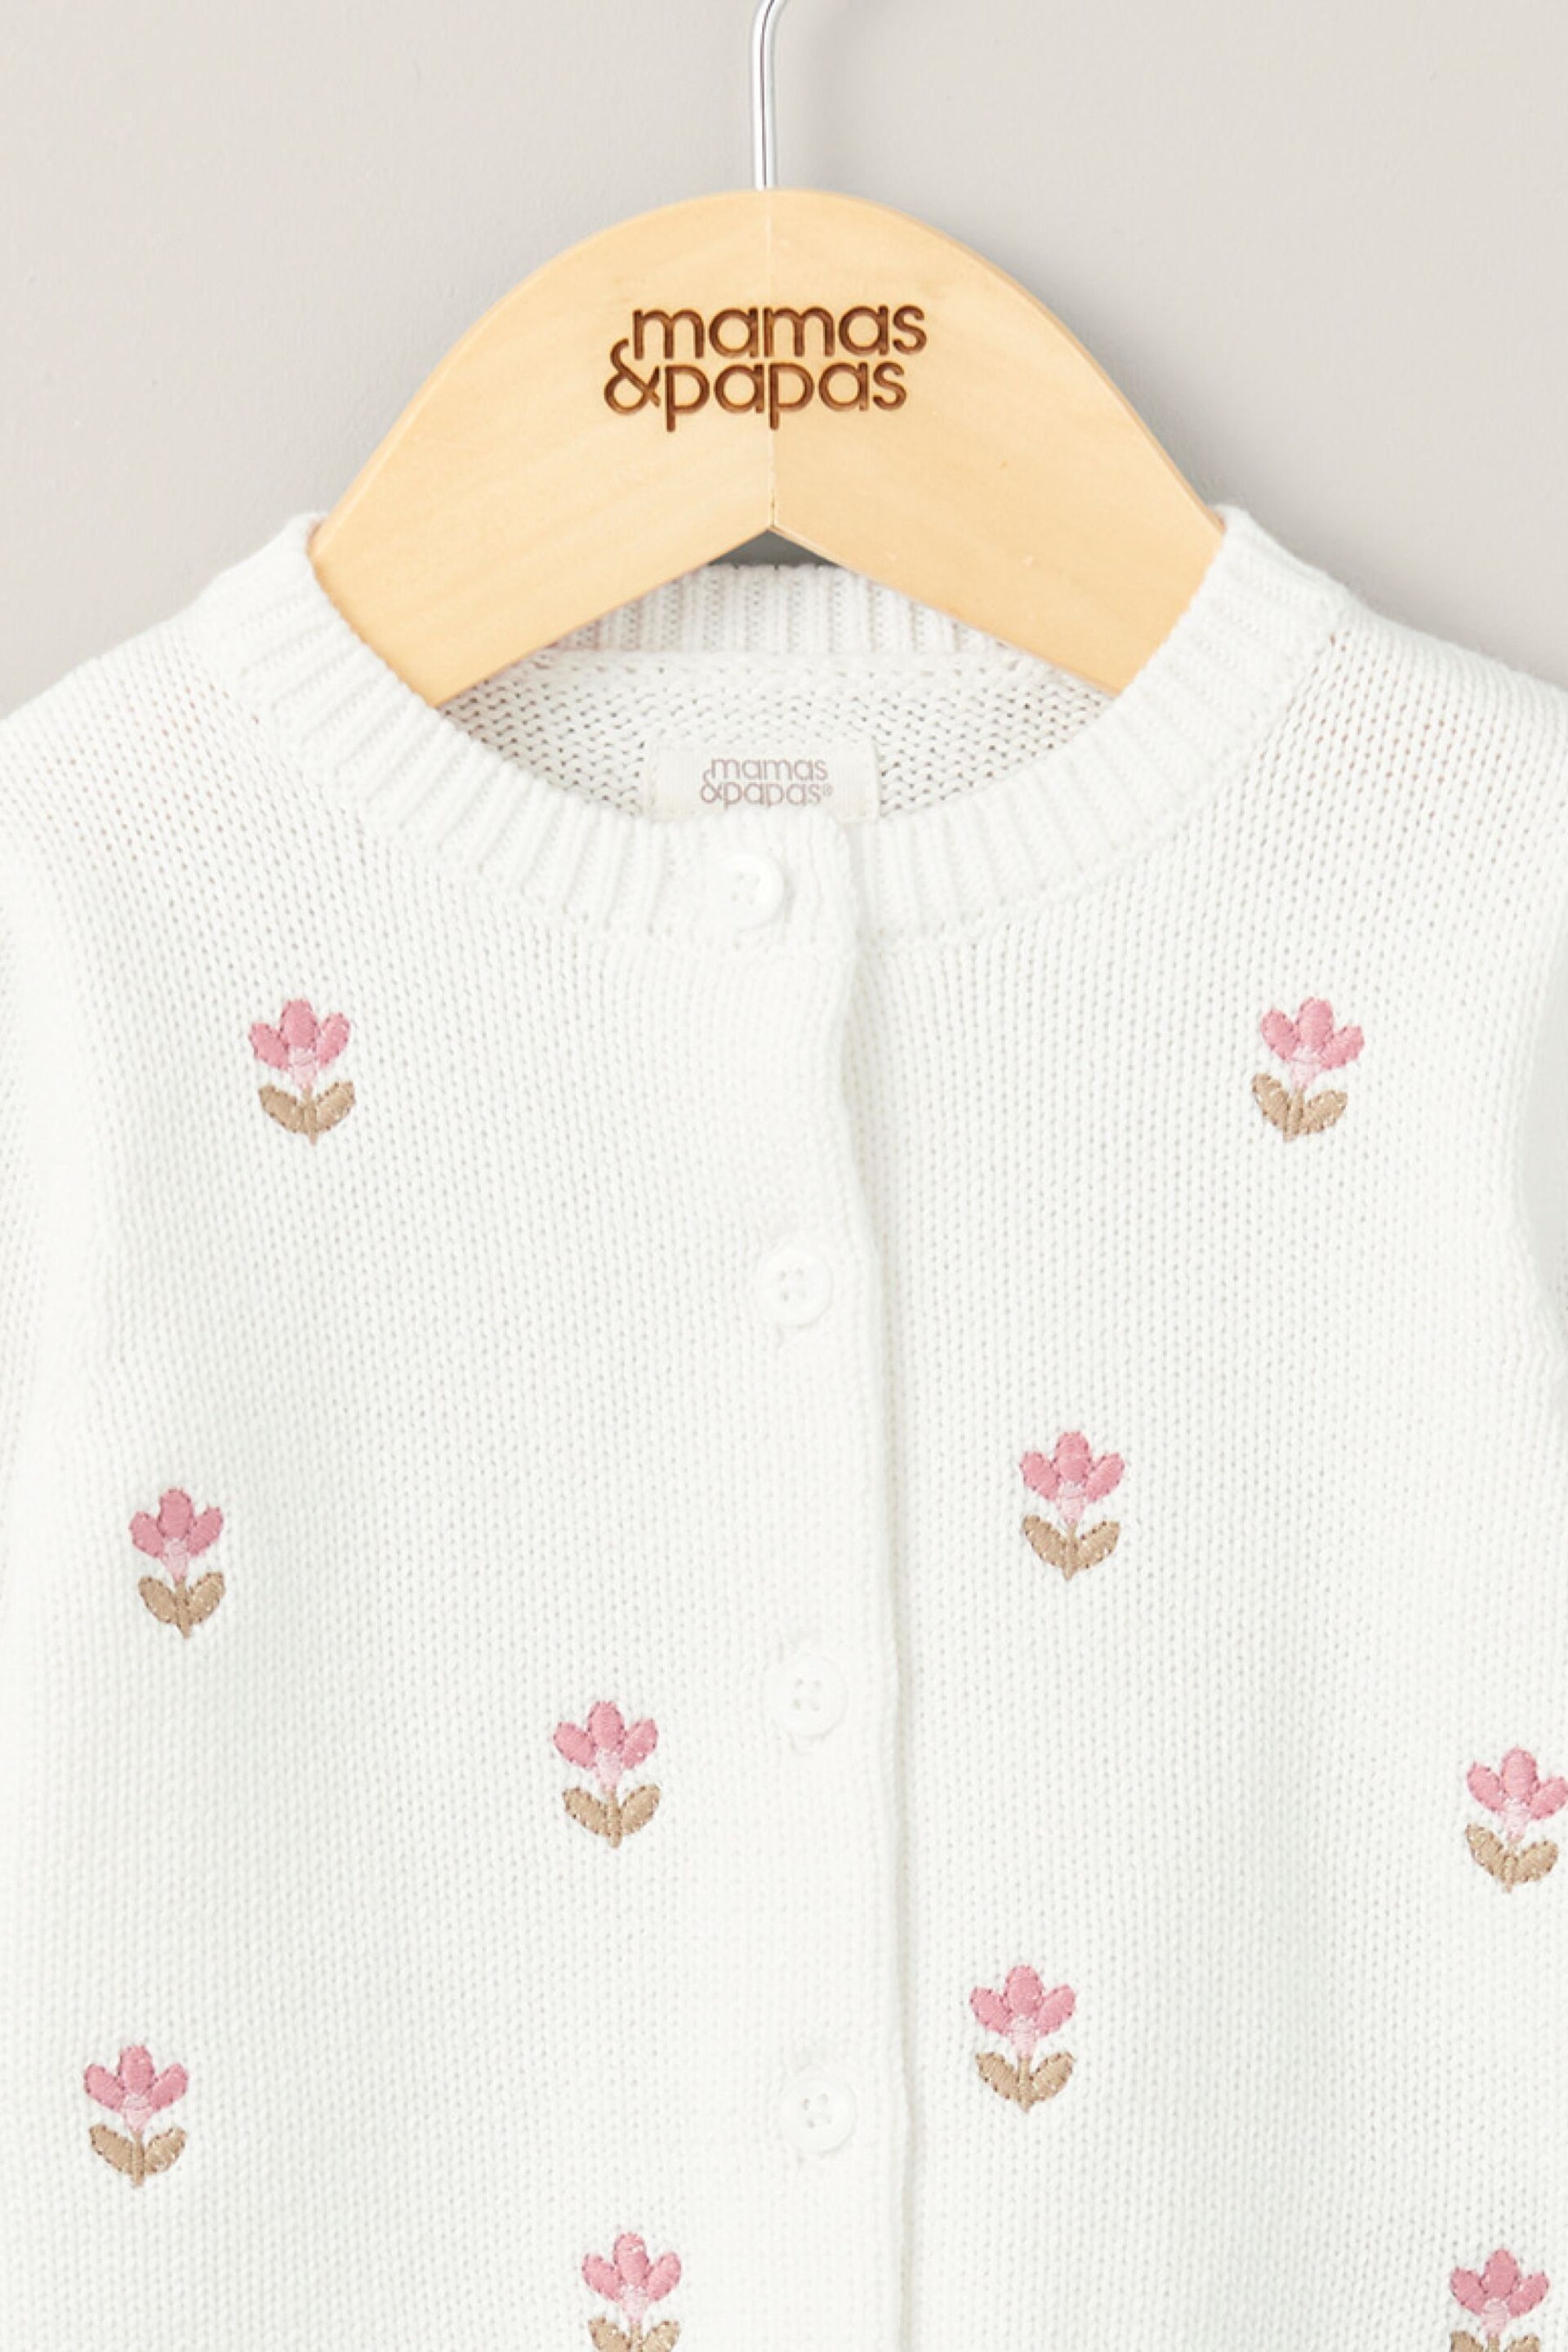 Mamas & Papas White Embroidered Knit Cardigan - Image 4 of 4